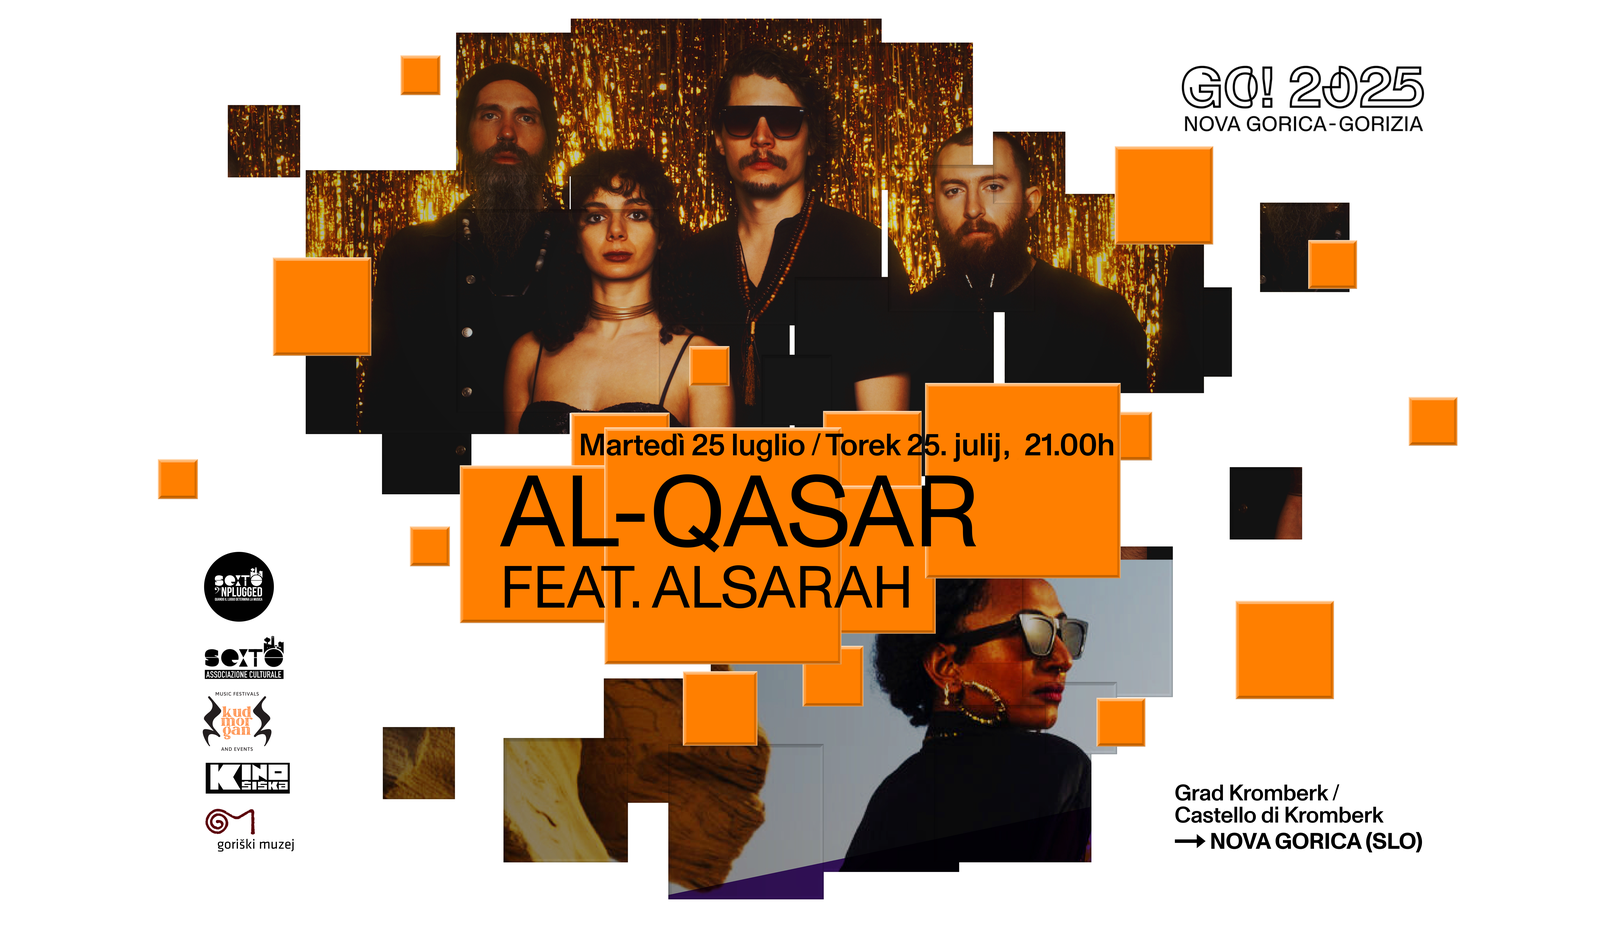 DOMANI! SEXTO 'NPLUGGED A NOVA GORICA: AL-QASAR feat. ALSARAH - 25 LUGLIO